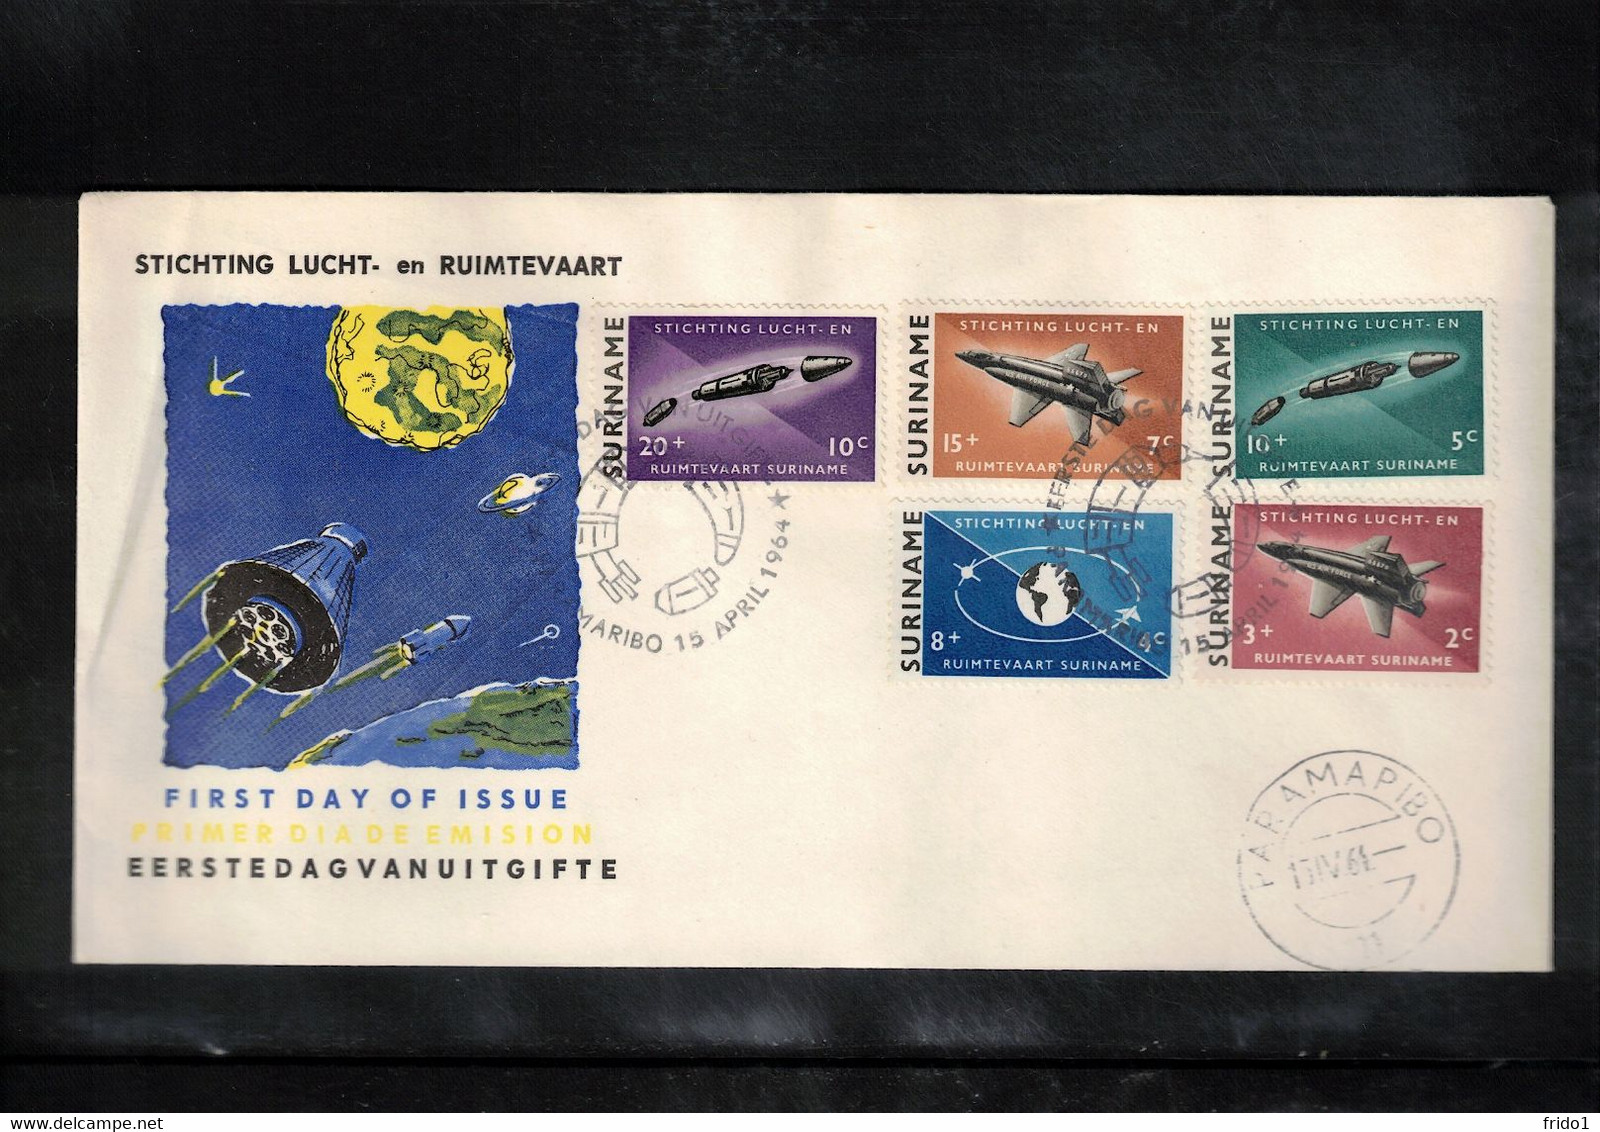 Suriname 1964 Space / Raumfahrt Rockets + Satellites FDC - South America